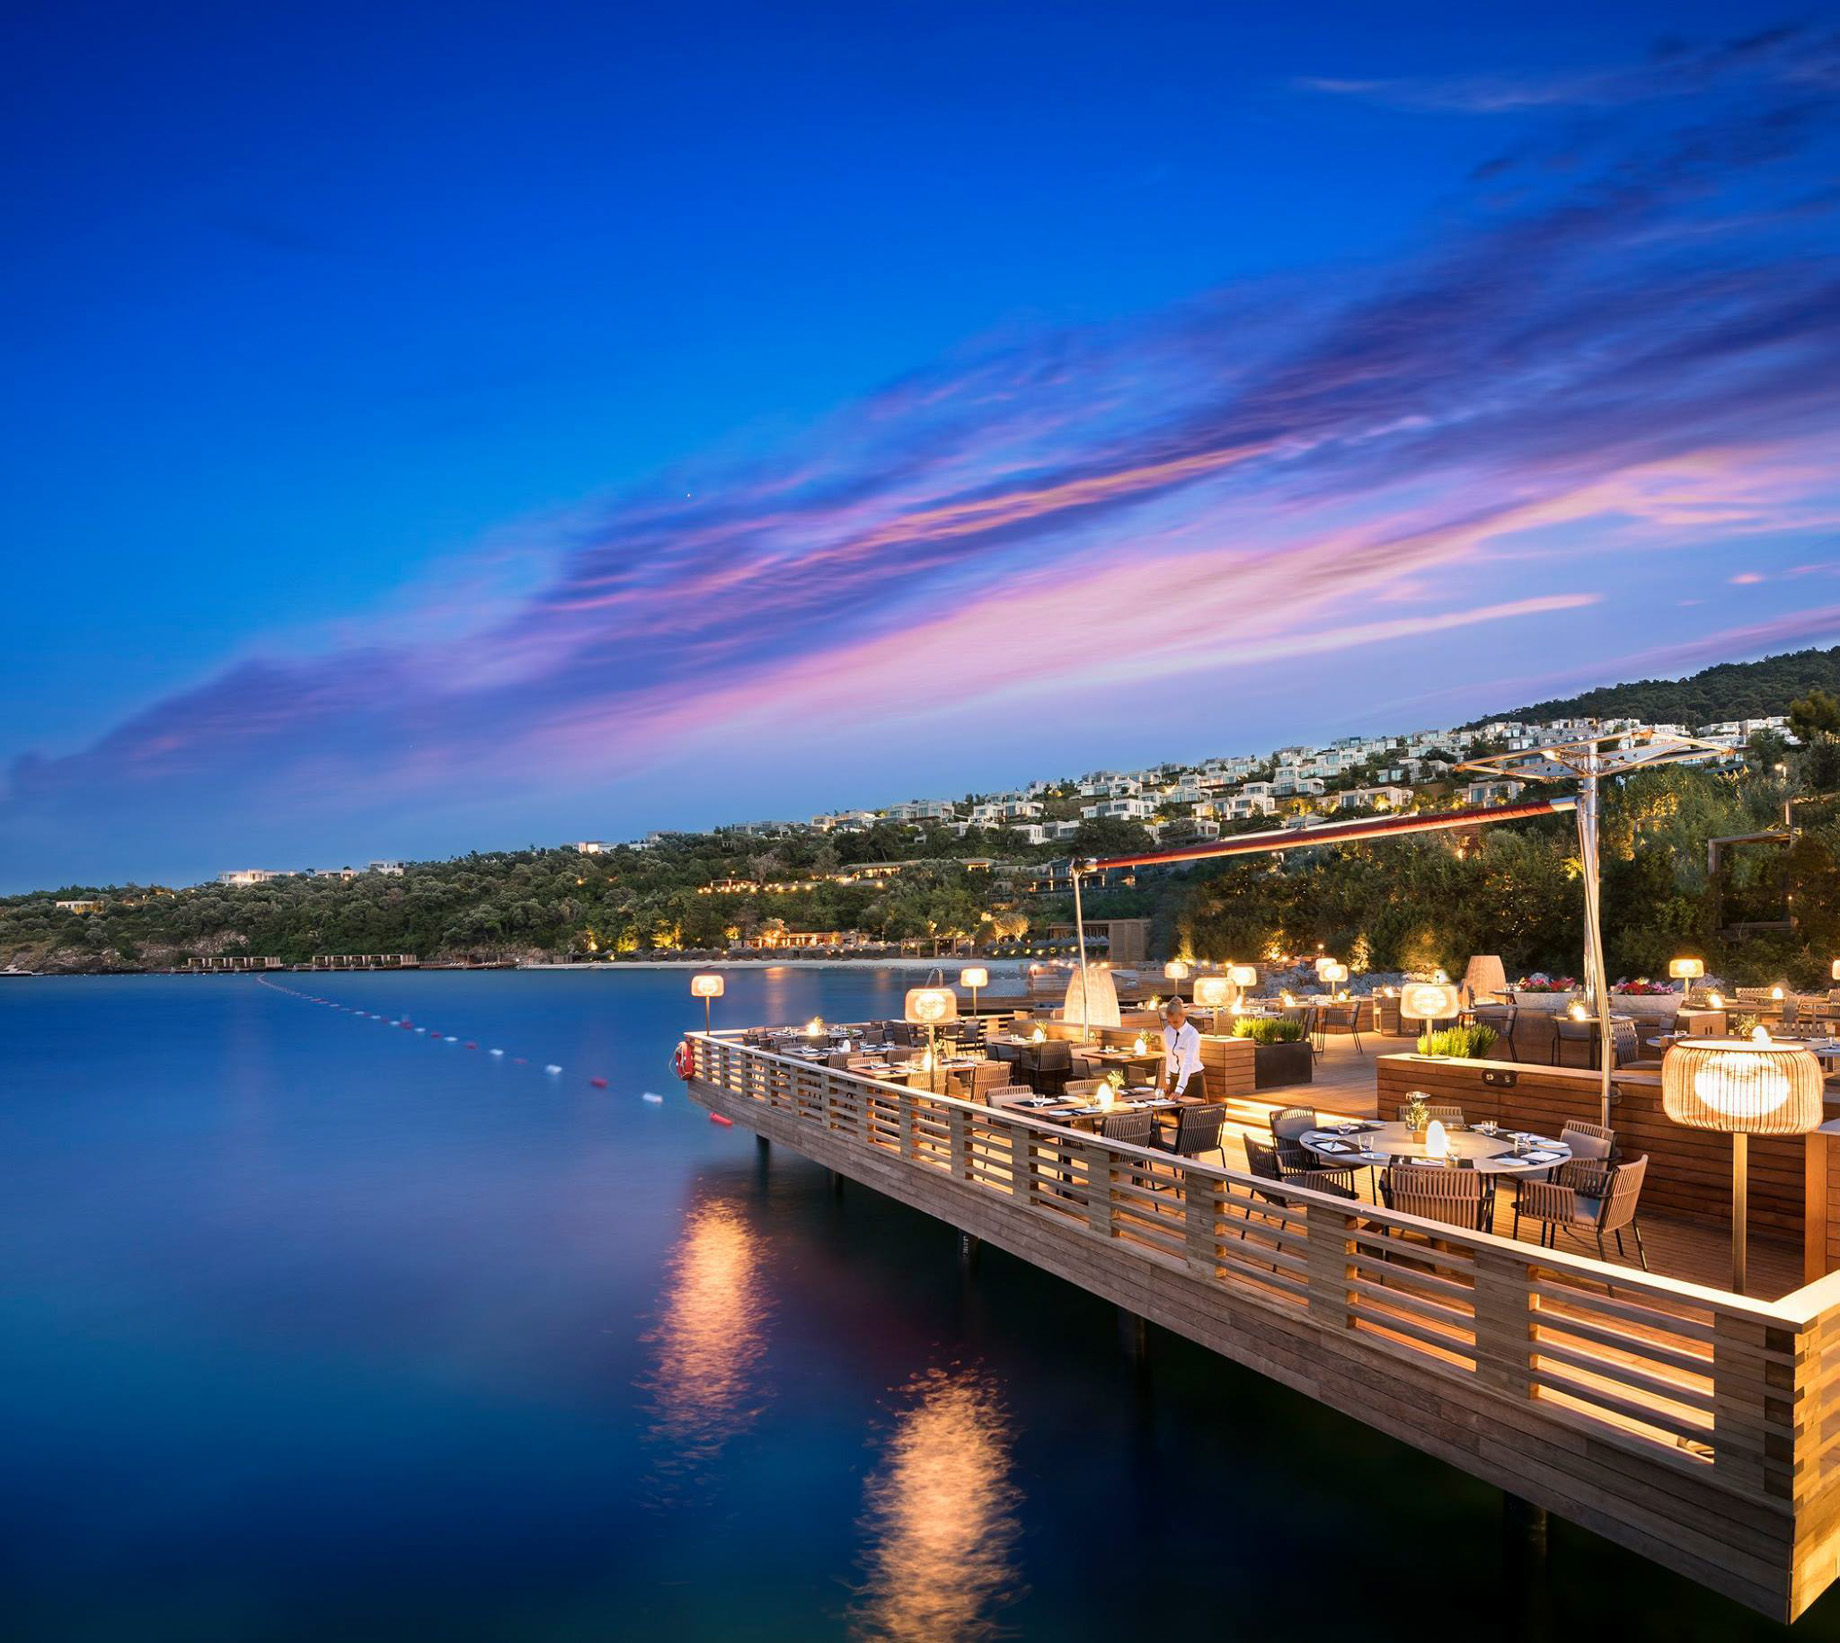 Mandarin Oriental, Bodrum Hotel – Bodrum, Turkey – Hakkasan Restaurant Terrace Night